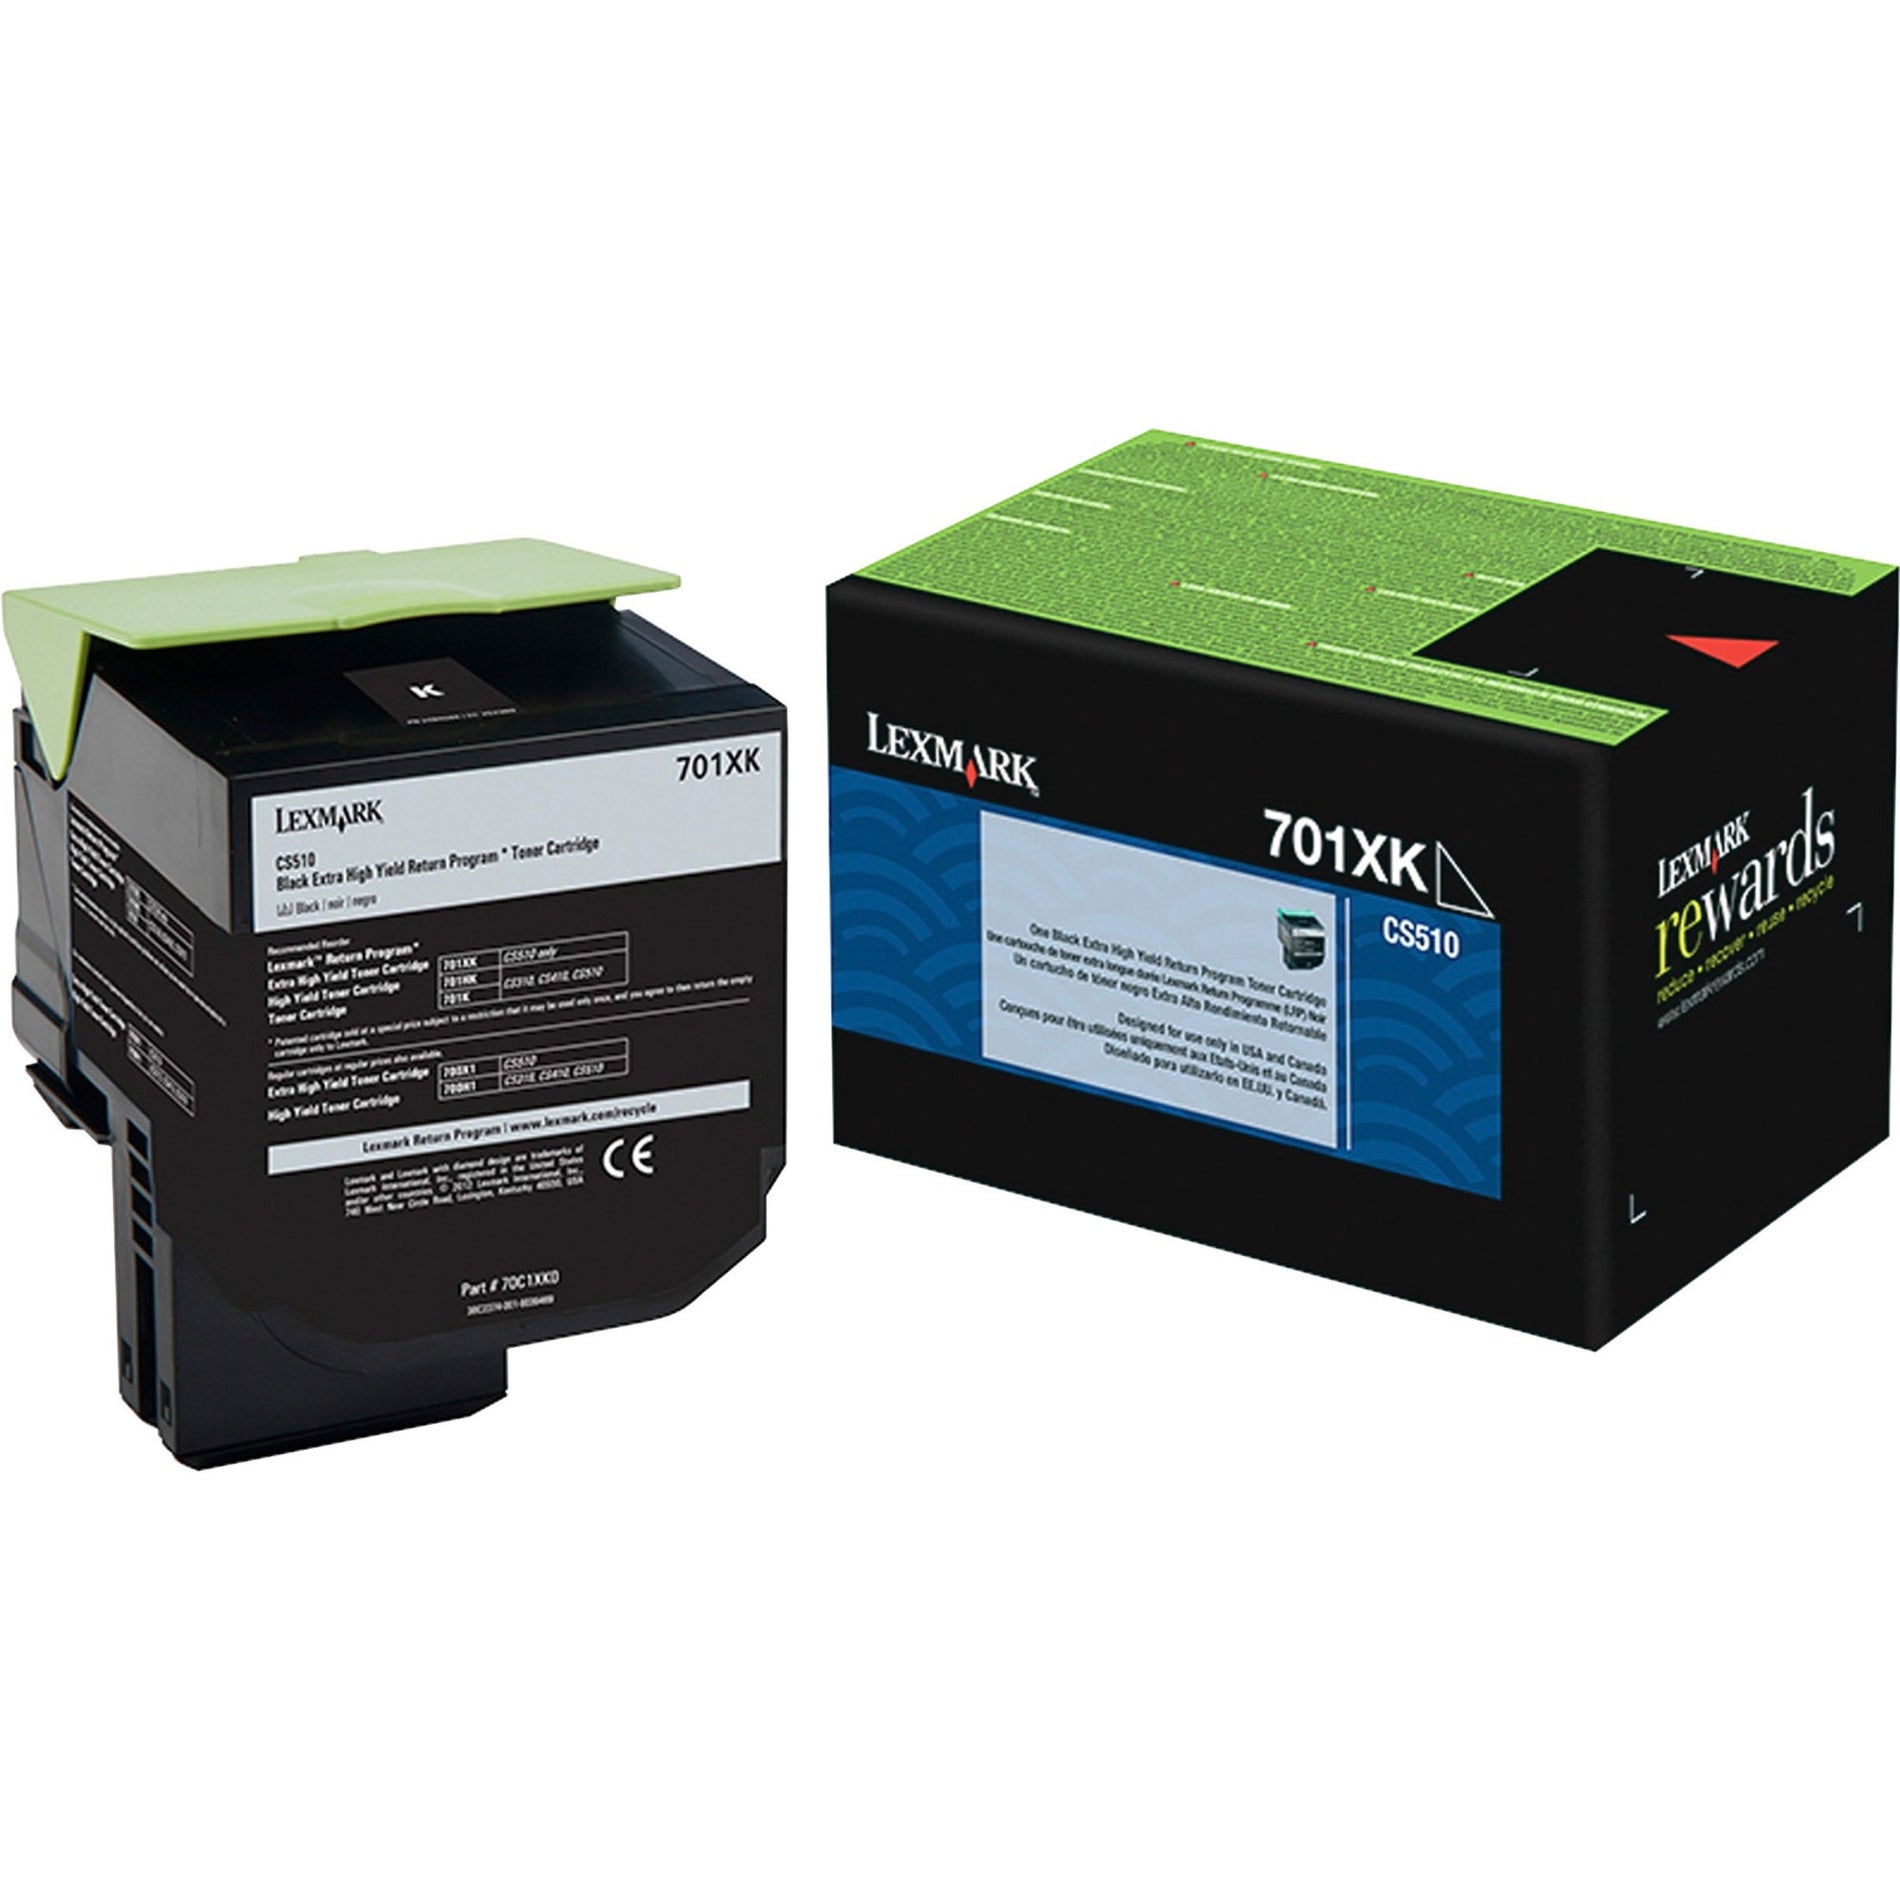 Lexmark 70C1XK0 701XK Unison Toner Cartridge, 8000 Page Yield, Black